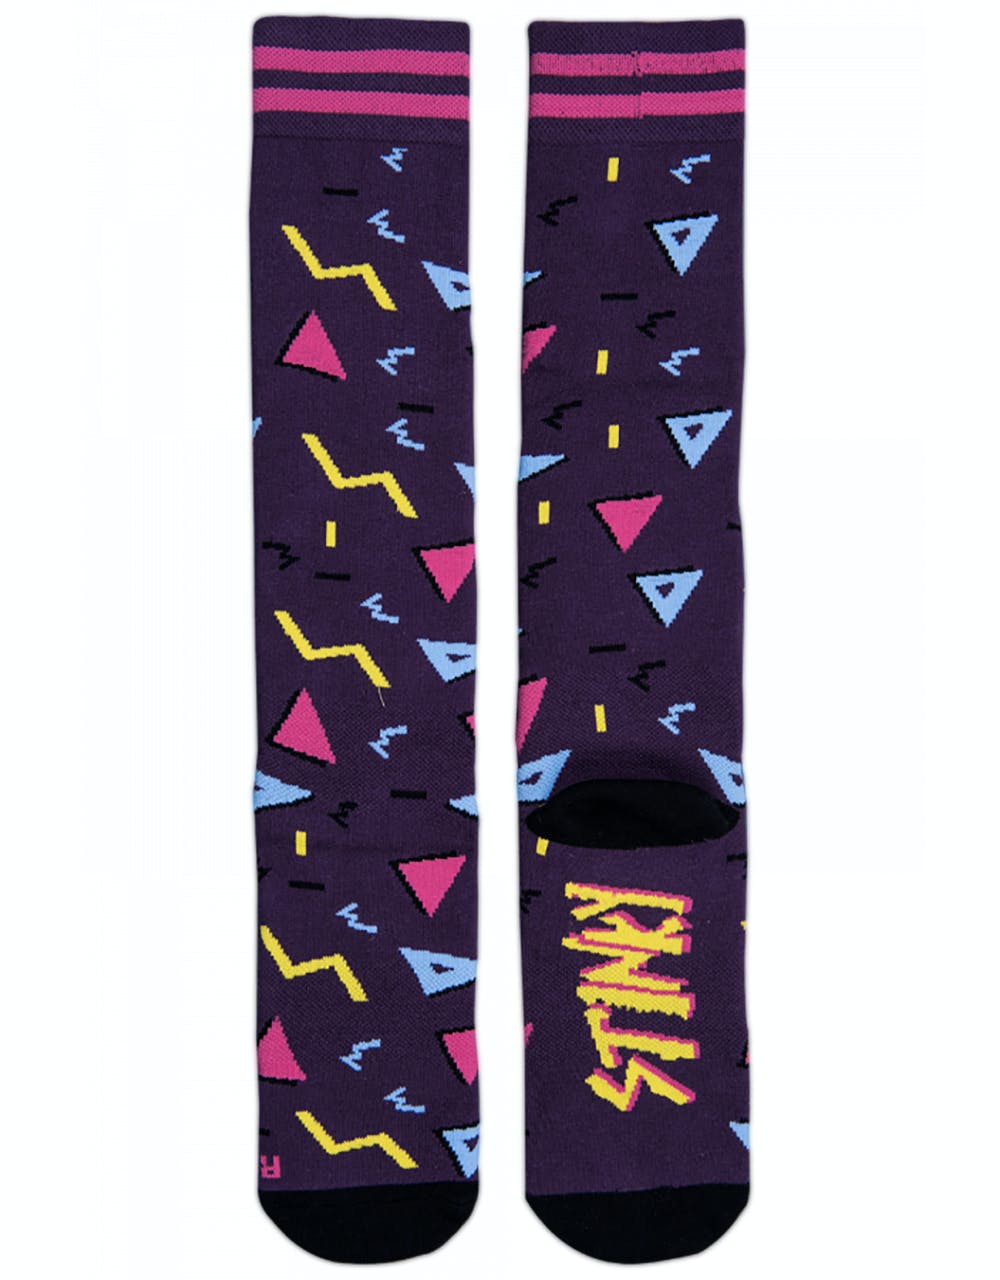 Stinky Purple Snowboard Socks - Purple